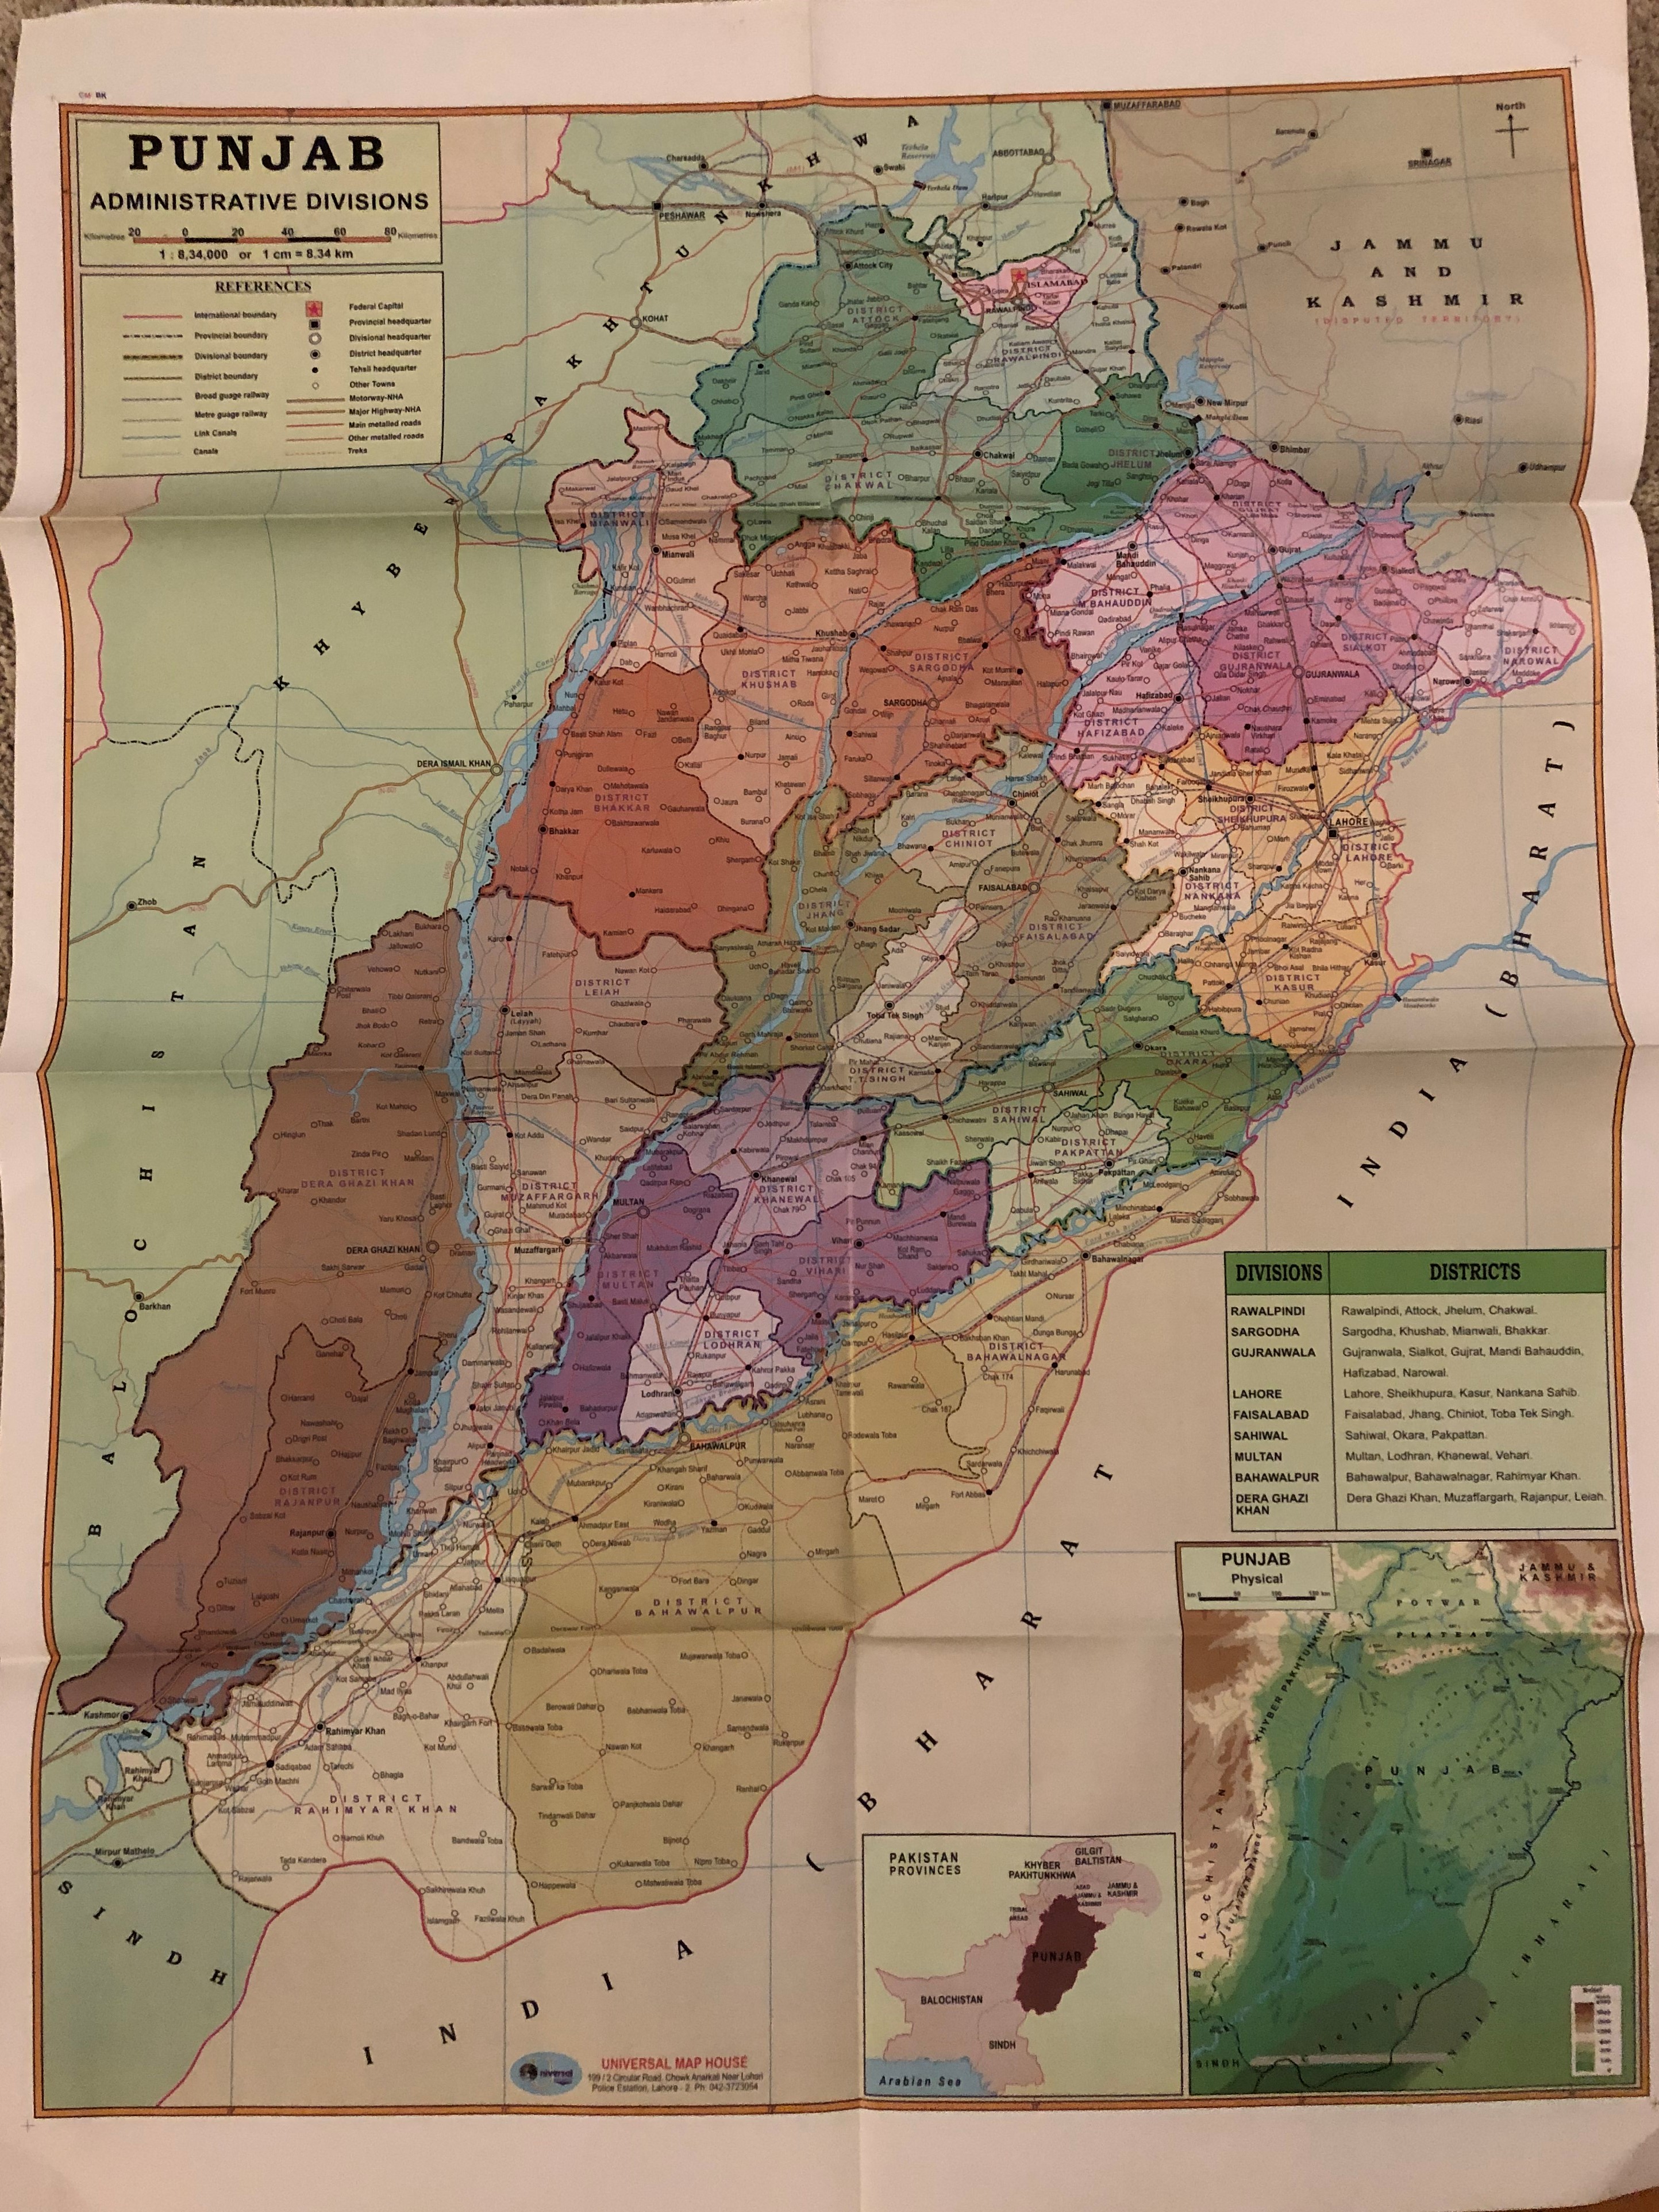 punjab-administrative-division-map-universal-map-house-divisional-district-boundaries-1-.jpg